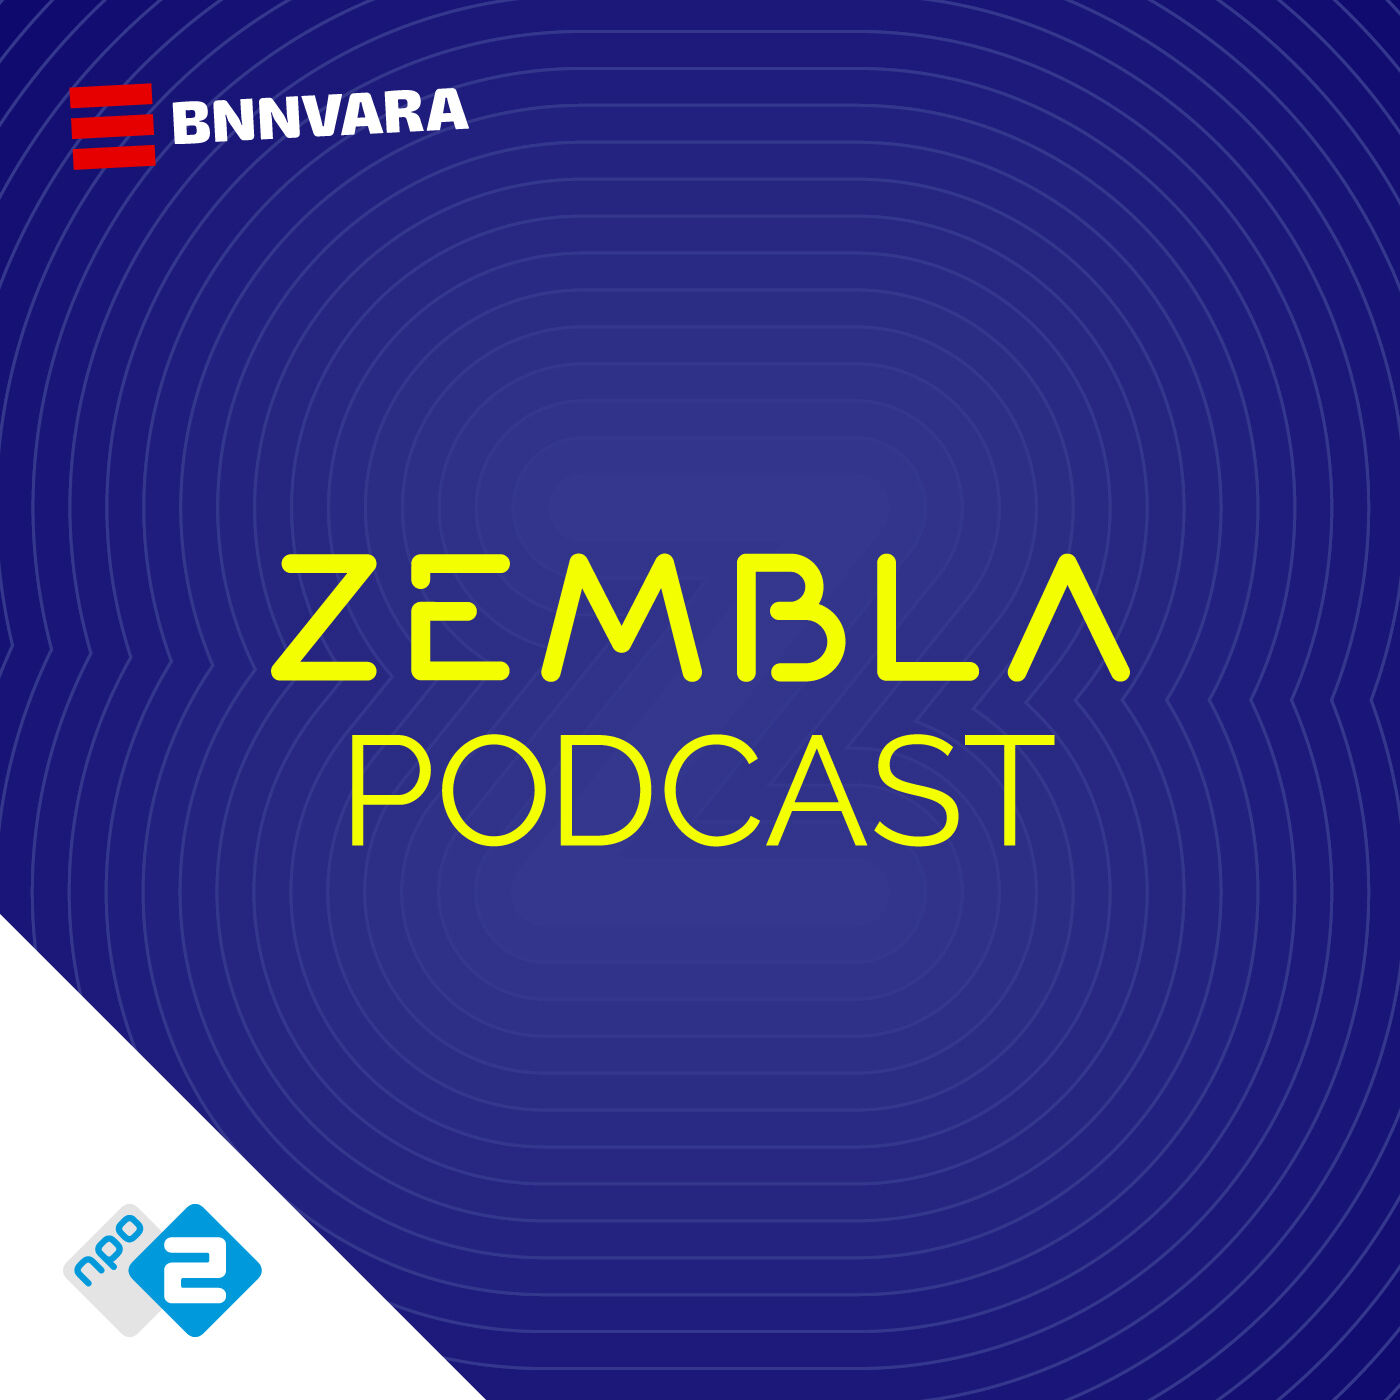 Zembla Podcast podcast show image